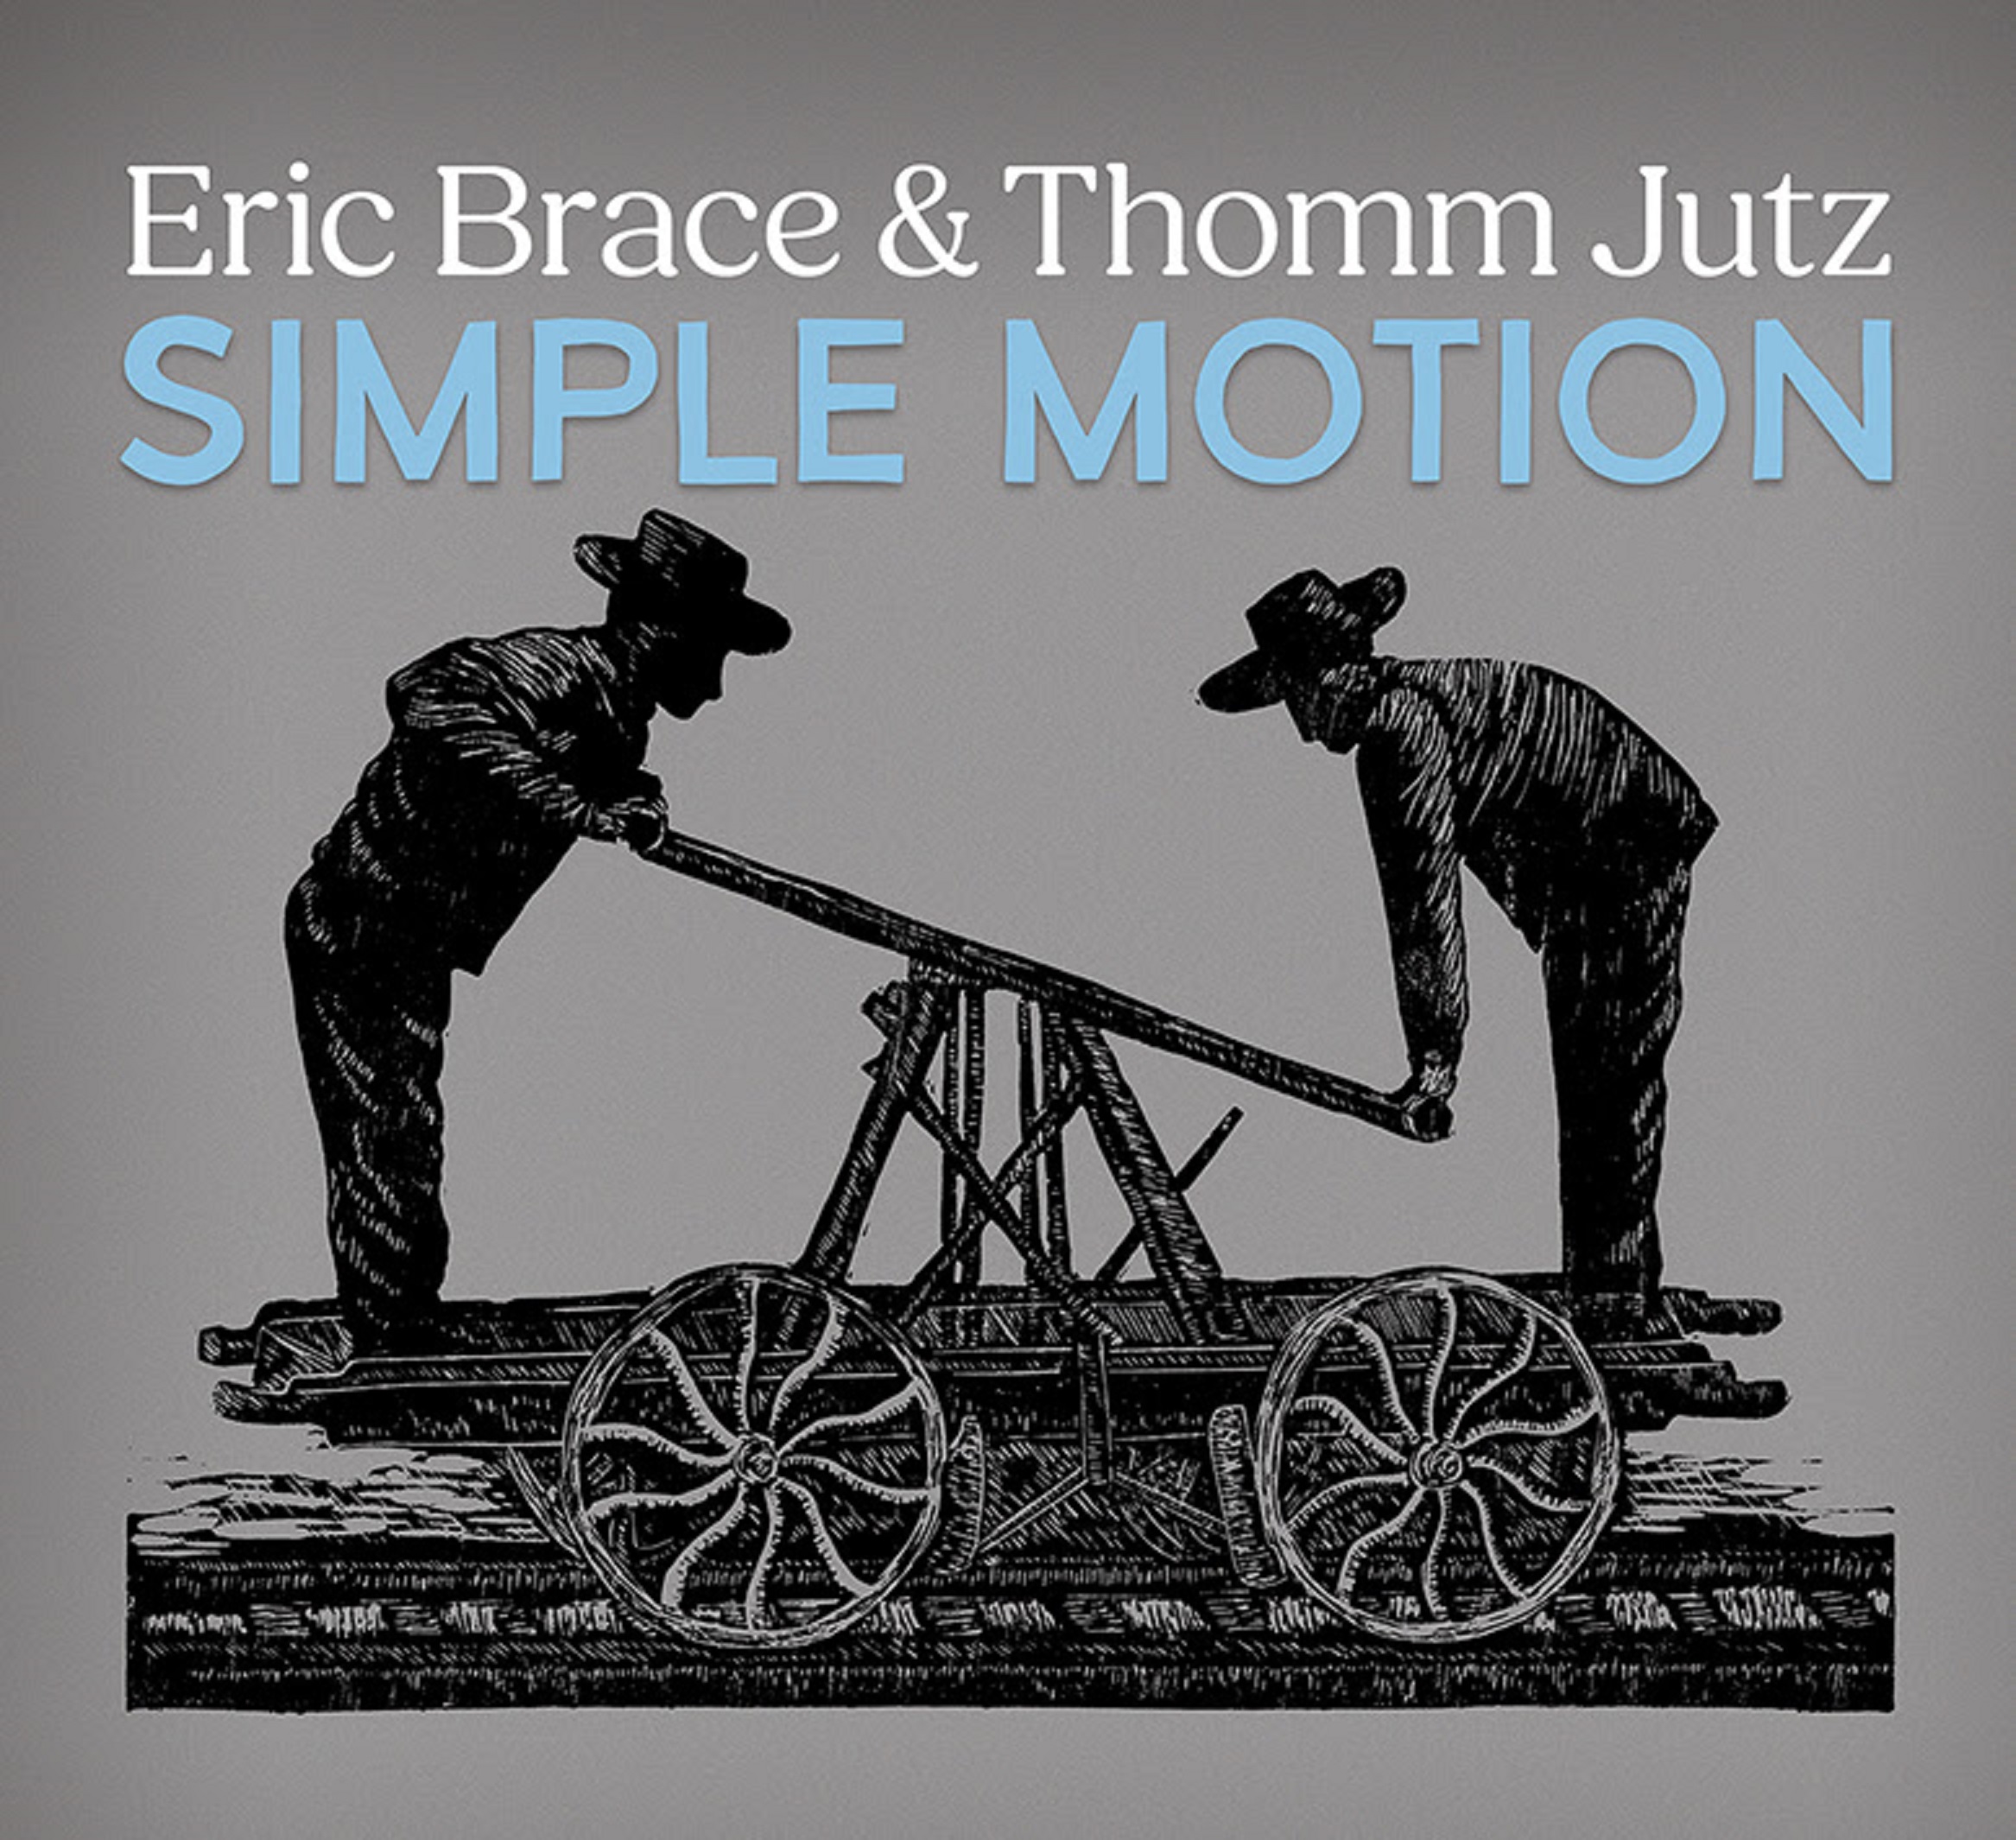 Eric Brace & Thomm Jutz set to Release "Debut" album on Red Beet Records